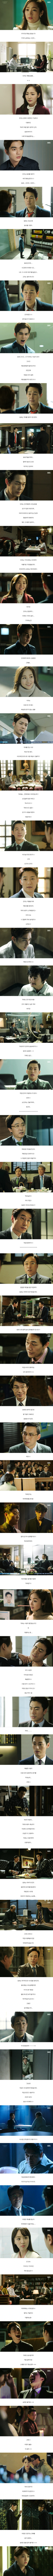 episode 14 captures for the Korean drama 'Remember'